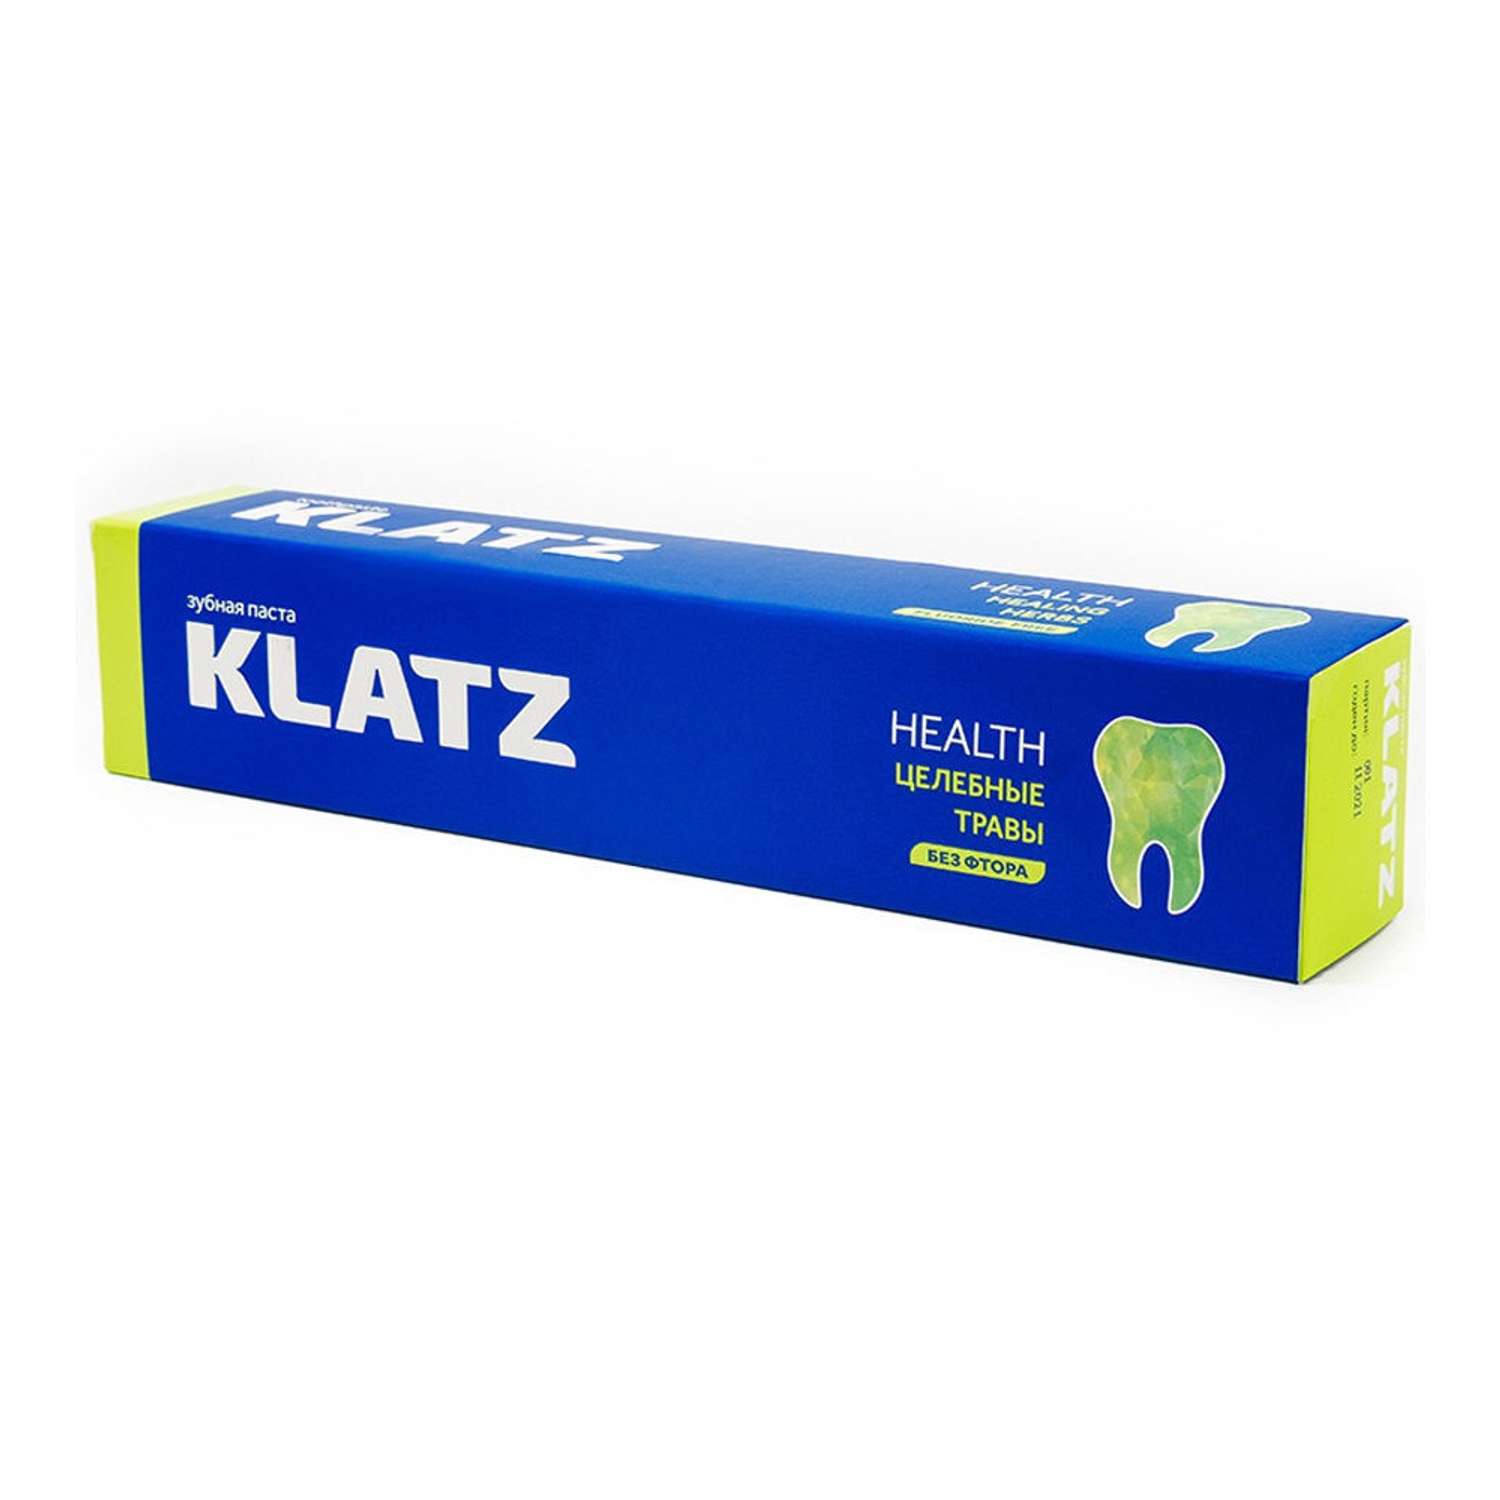 Зубная паста KLATZ HEALTH Целебные травы без фтора 75 мл - фото 3